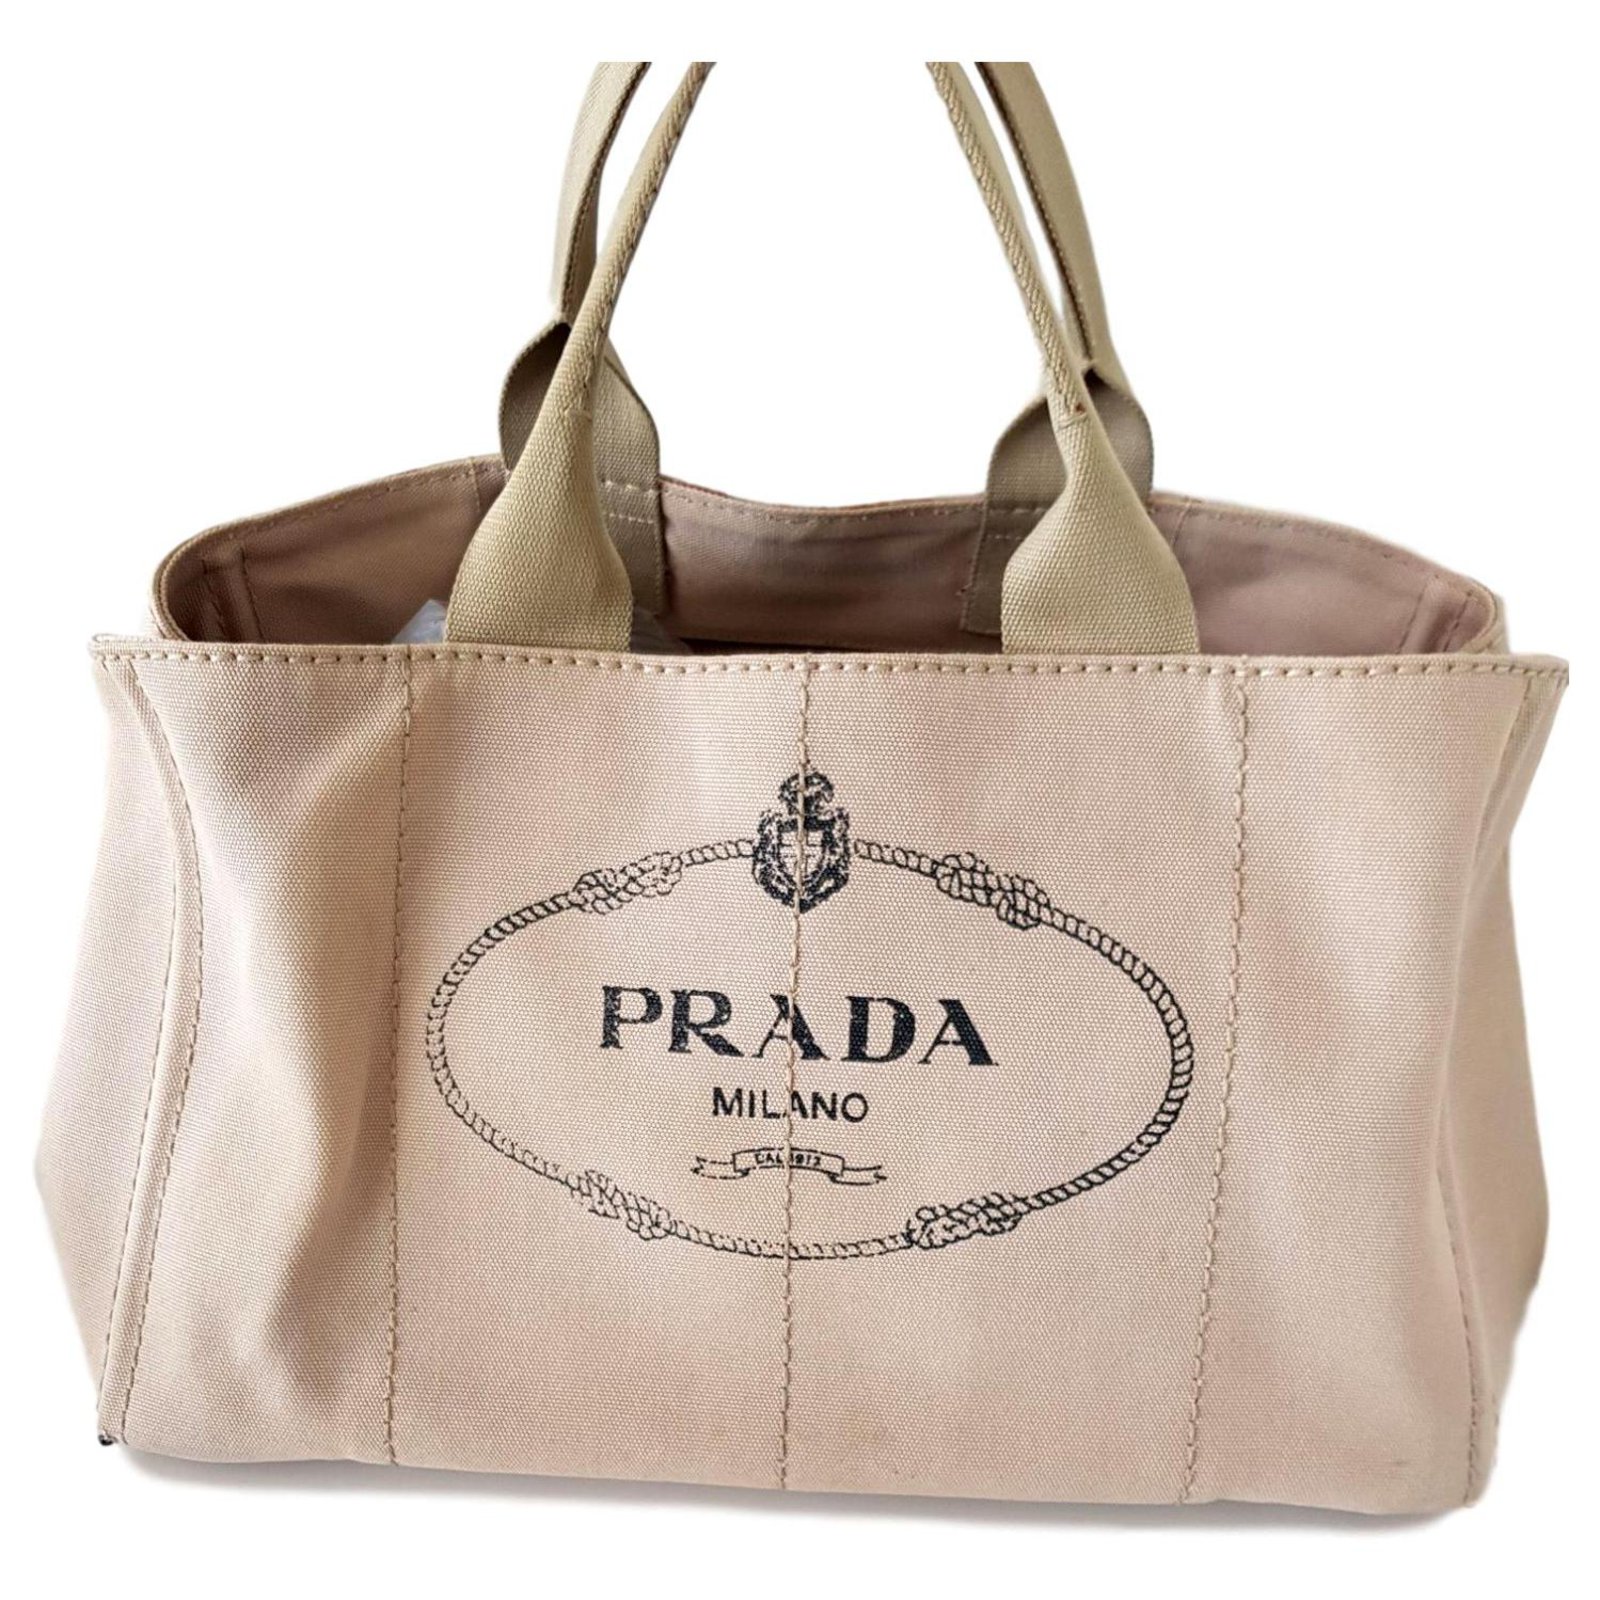 Prada Canvas Bag Factory Sale, 57% OFF | www.hcb.cat